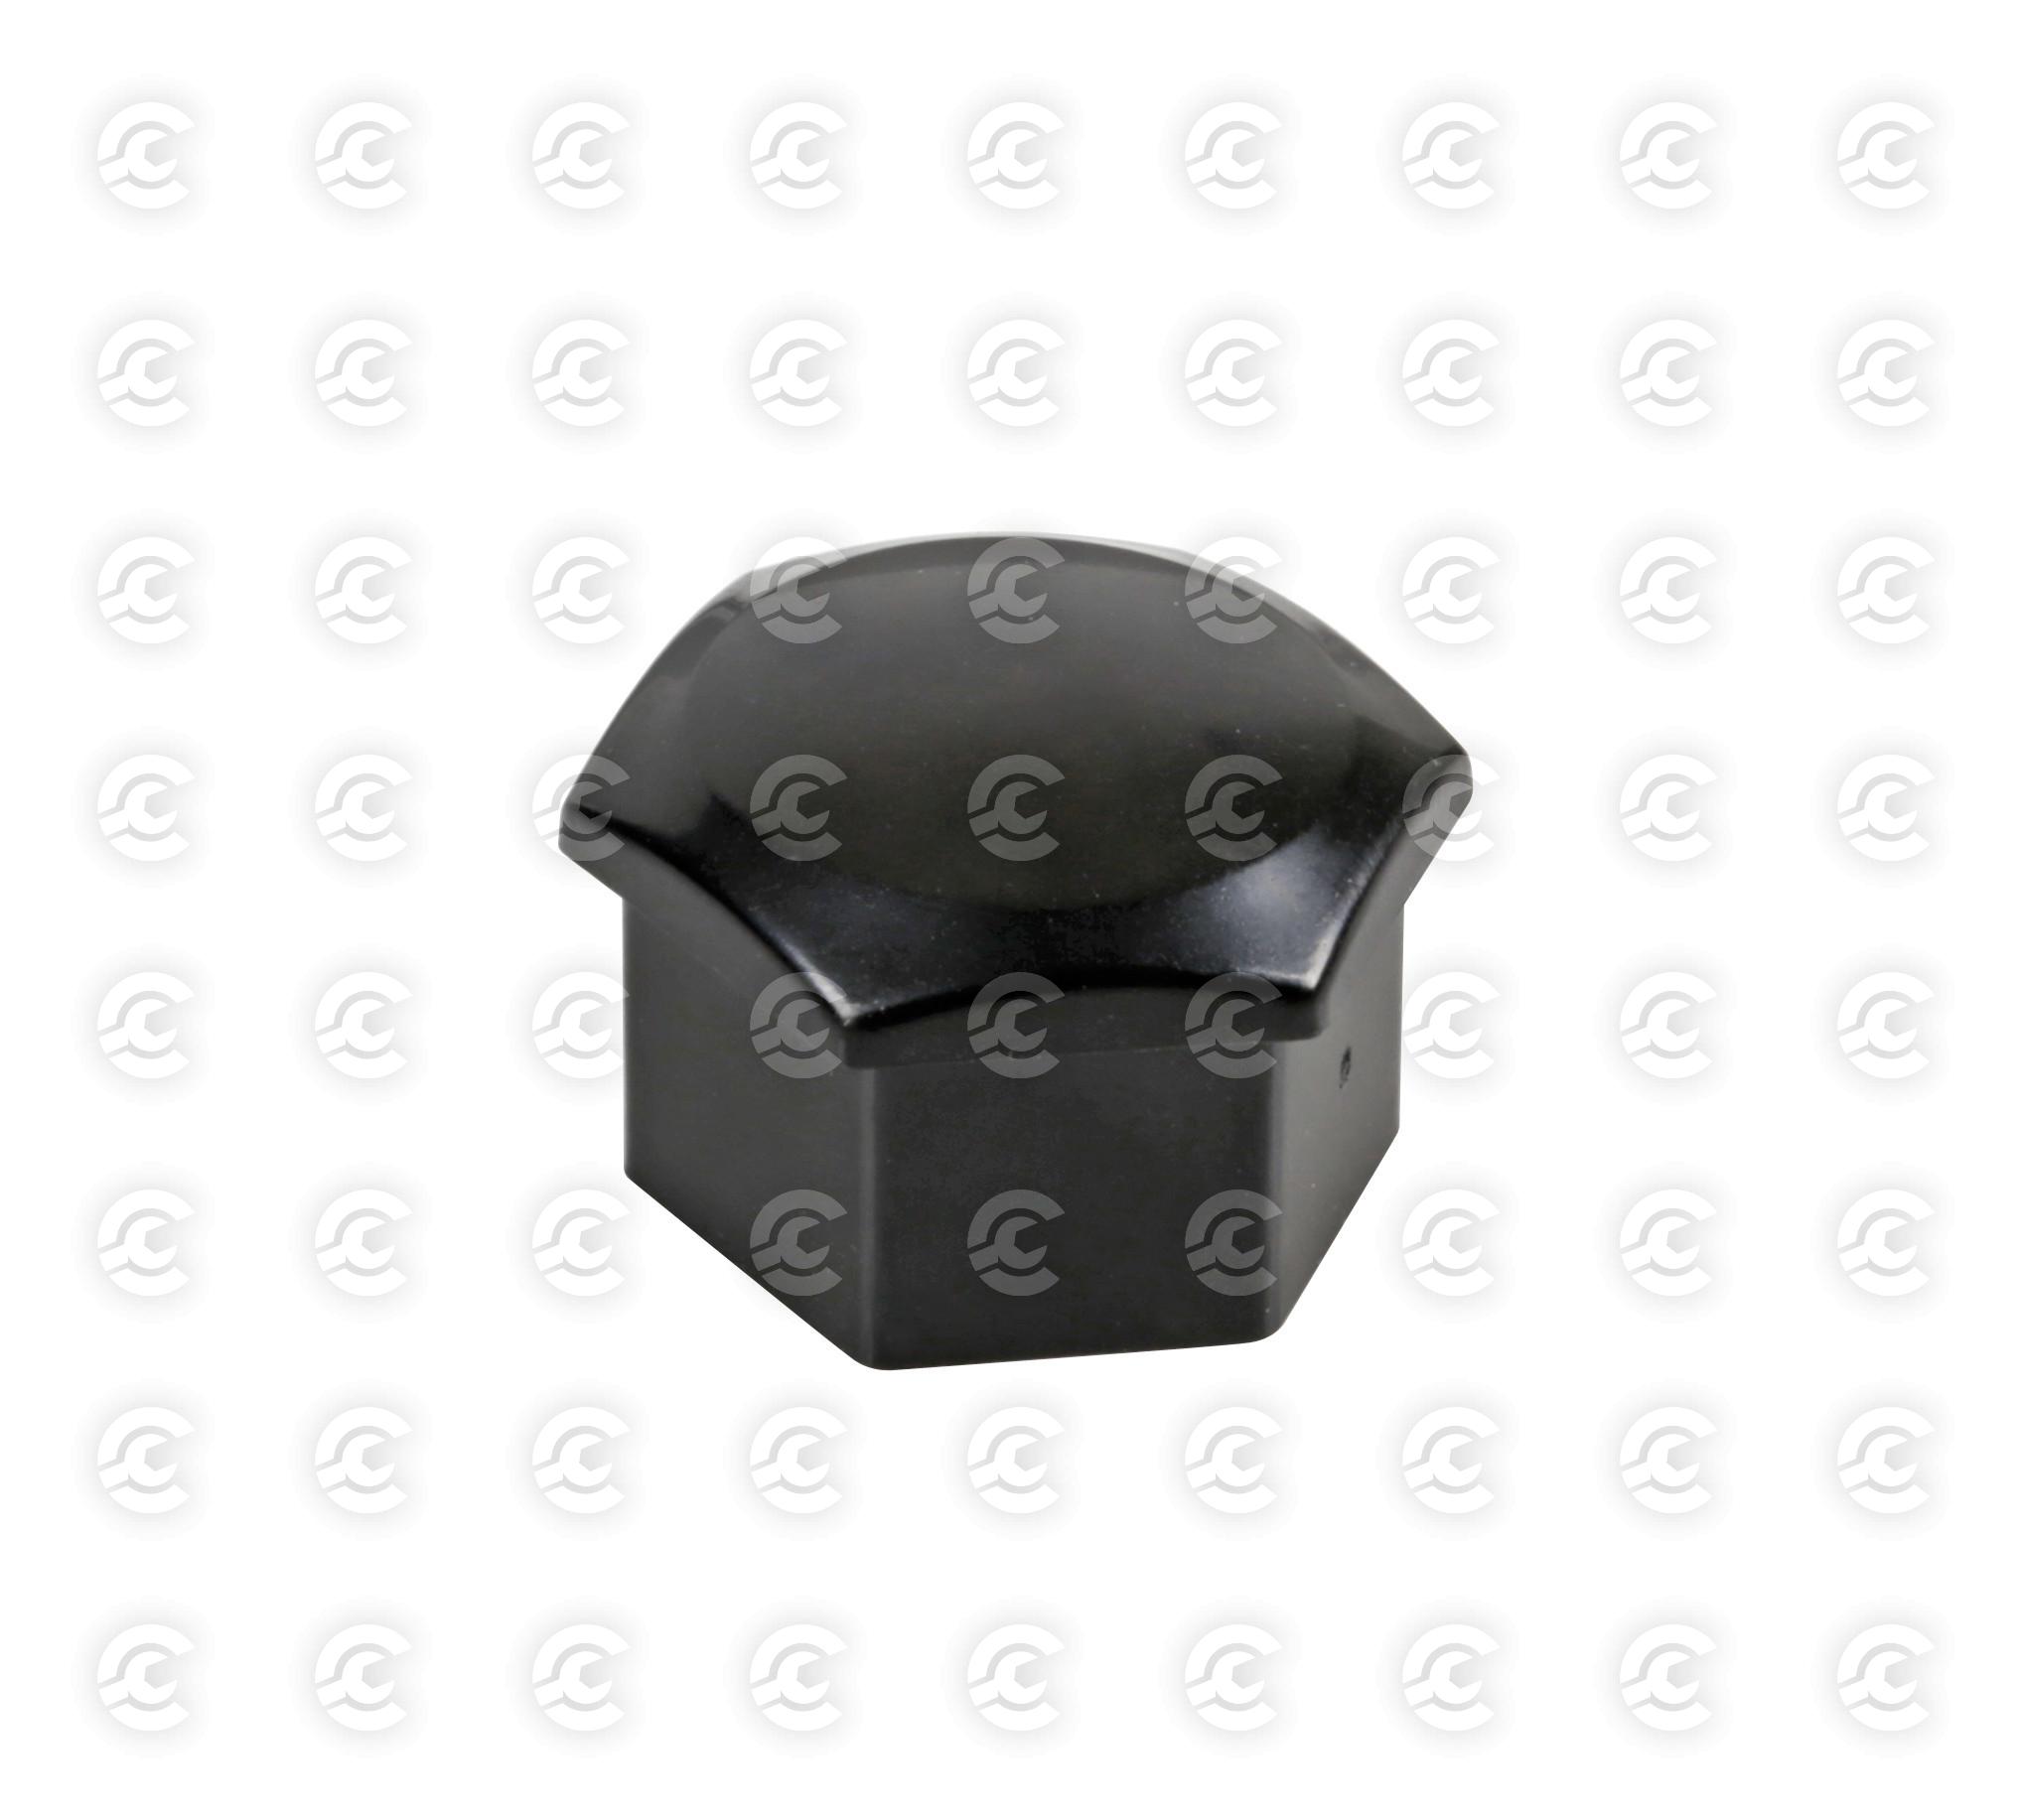 Black Nut Caps, 20 copribulloni in ABS - Ø 17 mm